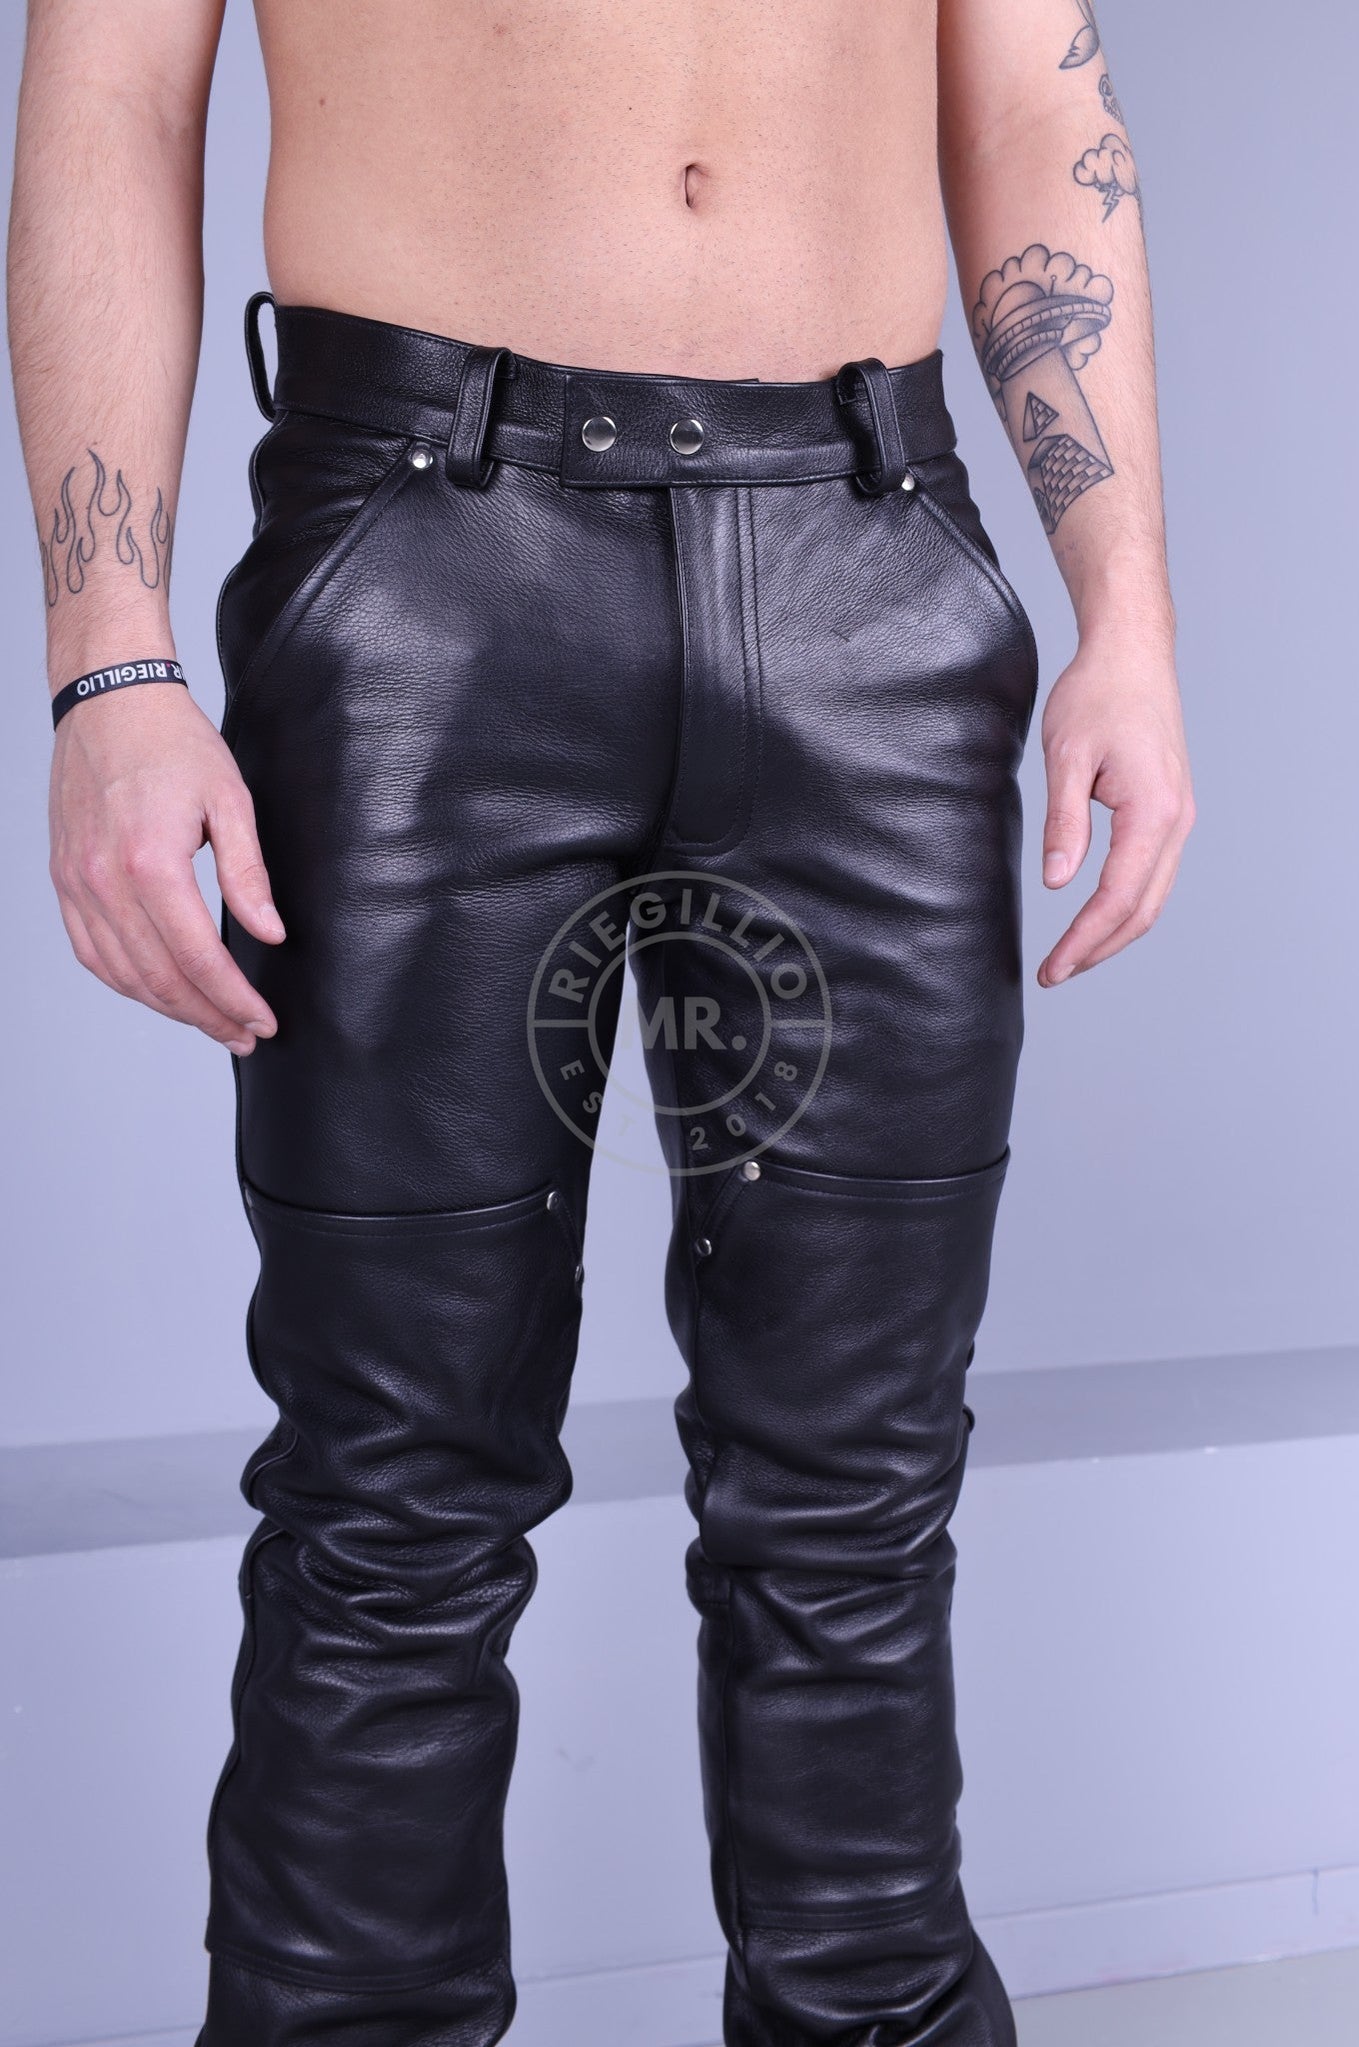 Black Leather Carpenter Pants by MR. Riegillio